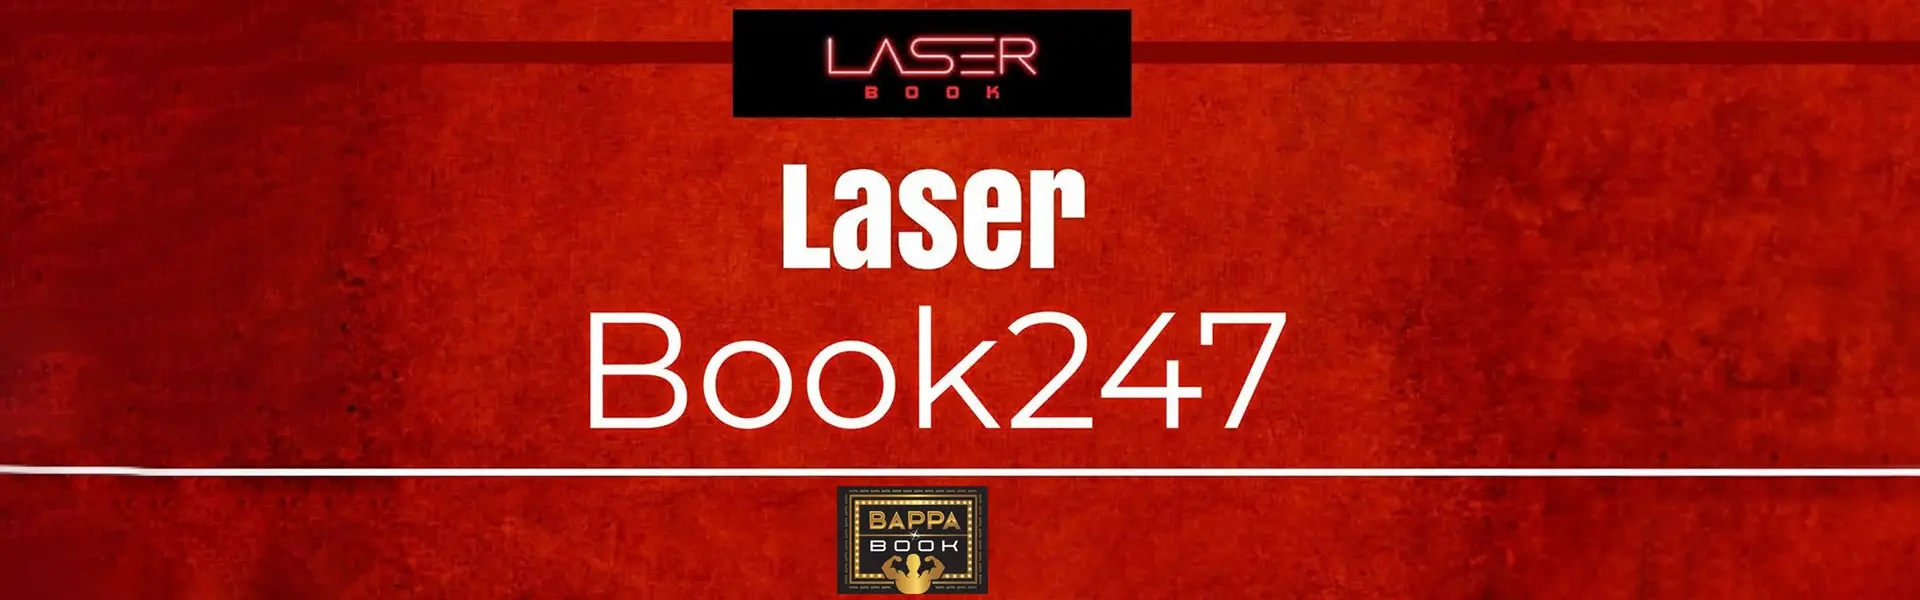 bappaonlinebook Laserbook247 